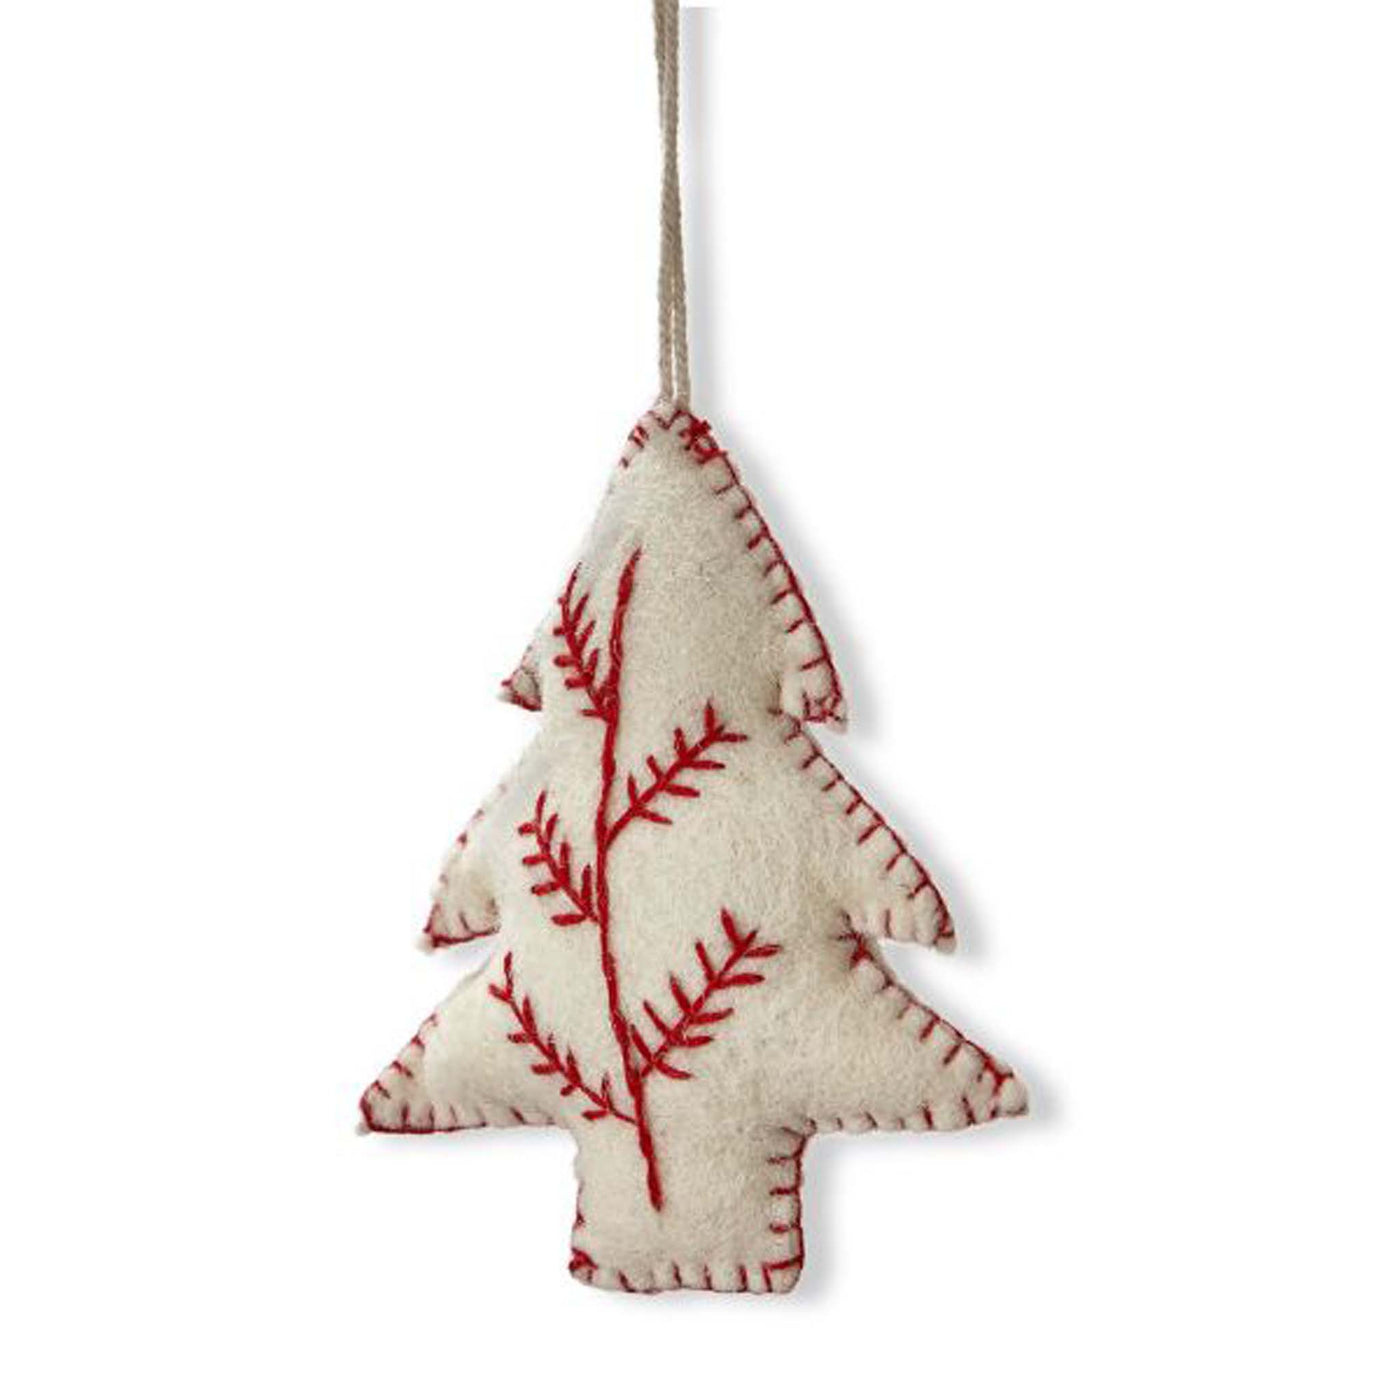 Sprig Felt Stitched Christmas Tree Ornament